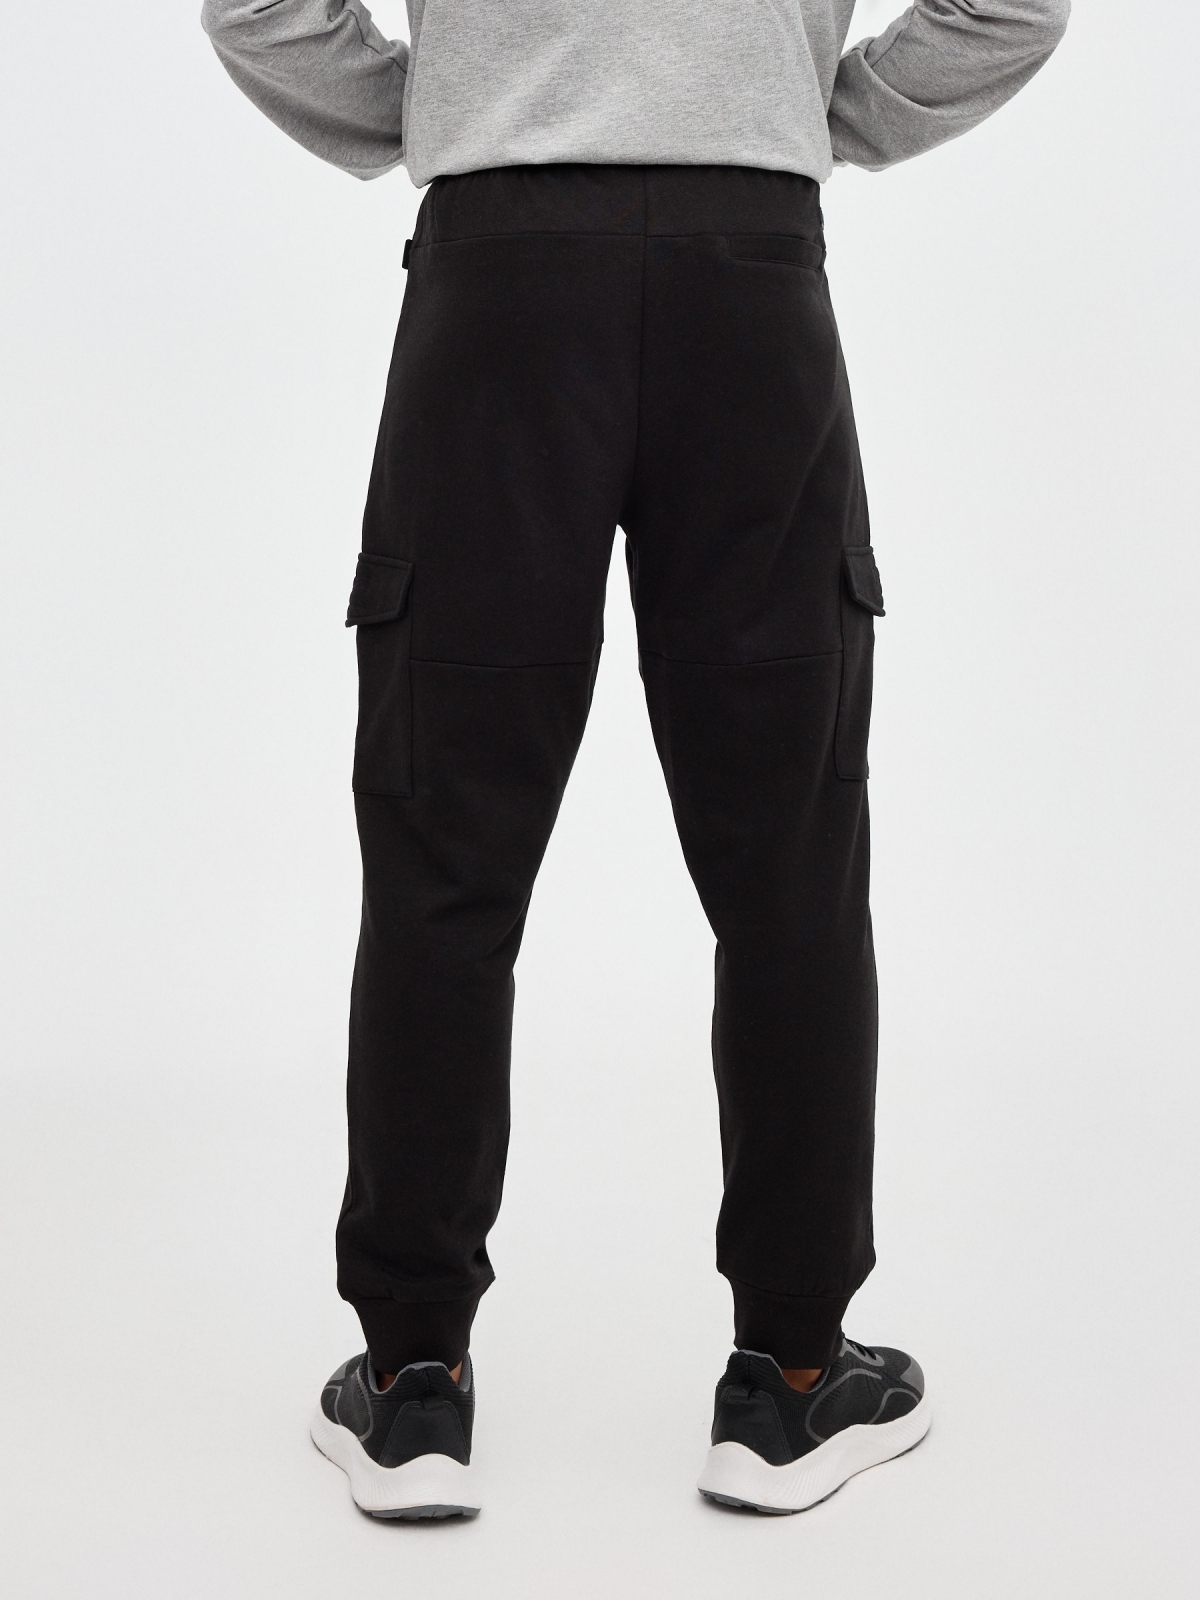 Plush jogger pants black middle back view